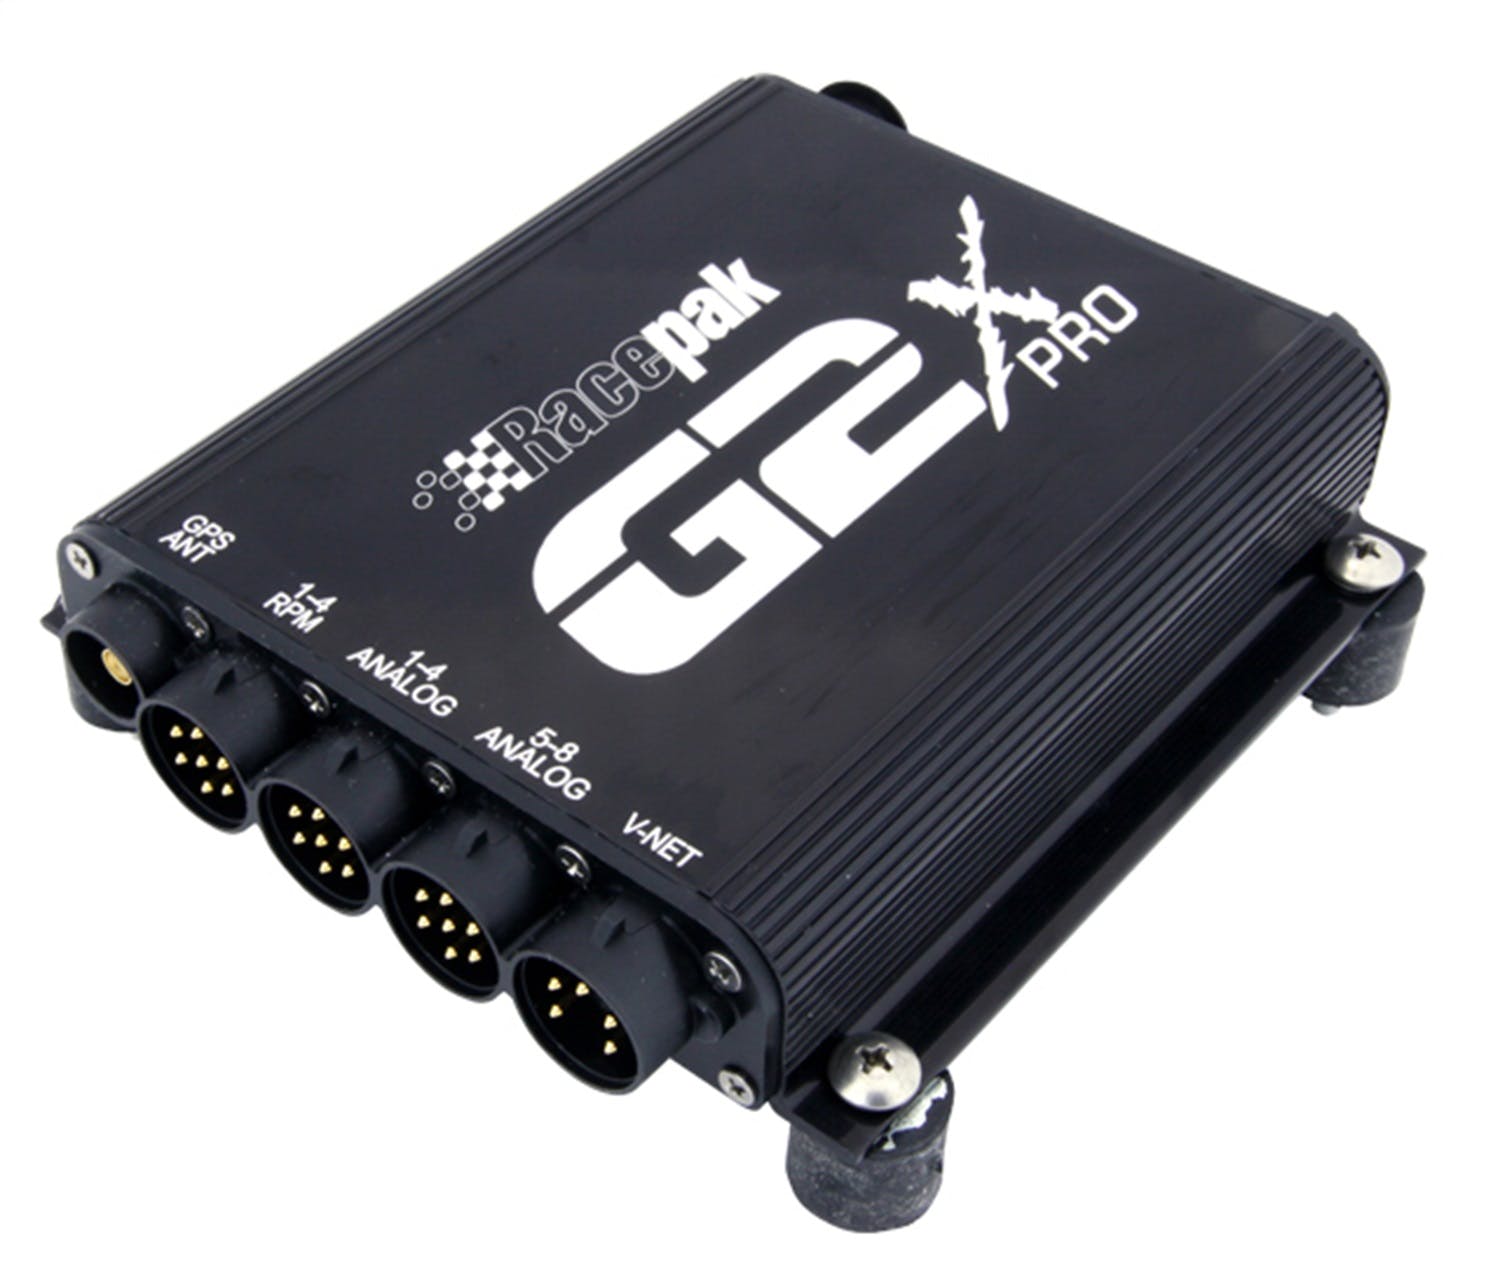 Racepak 600-KT-G2XPRO G2X Pro Data Logger